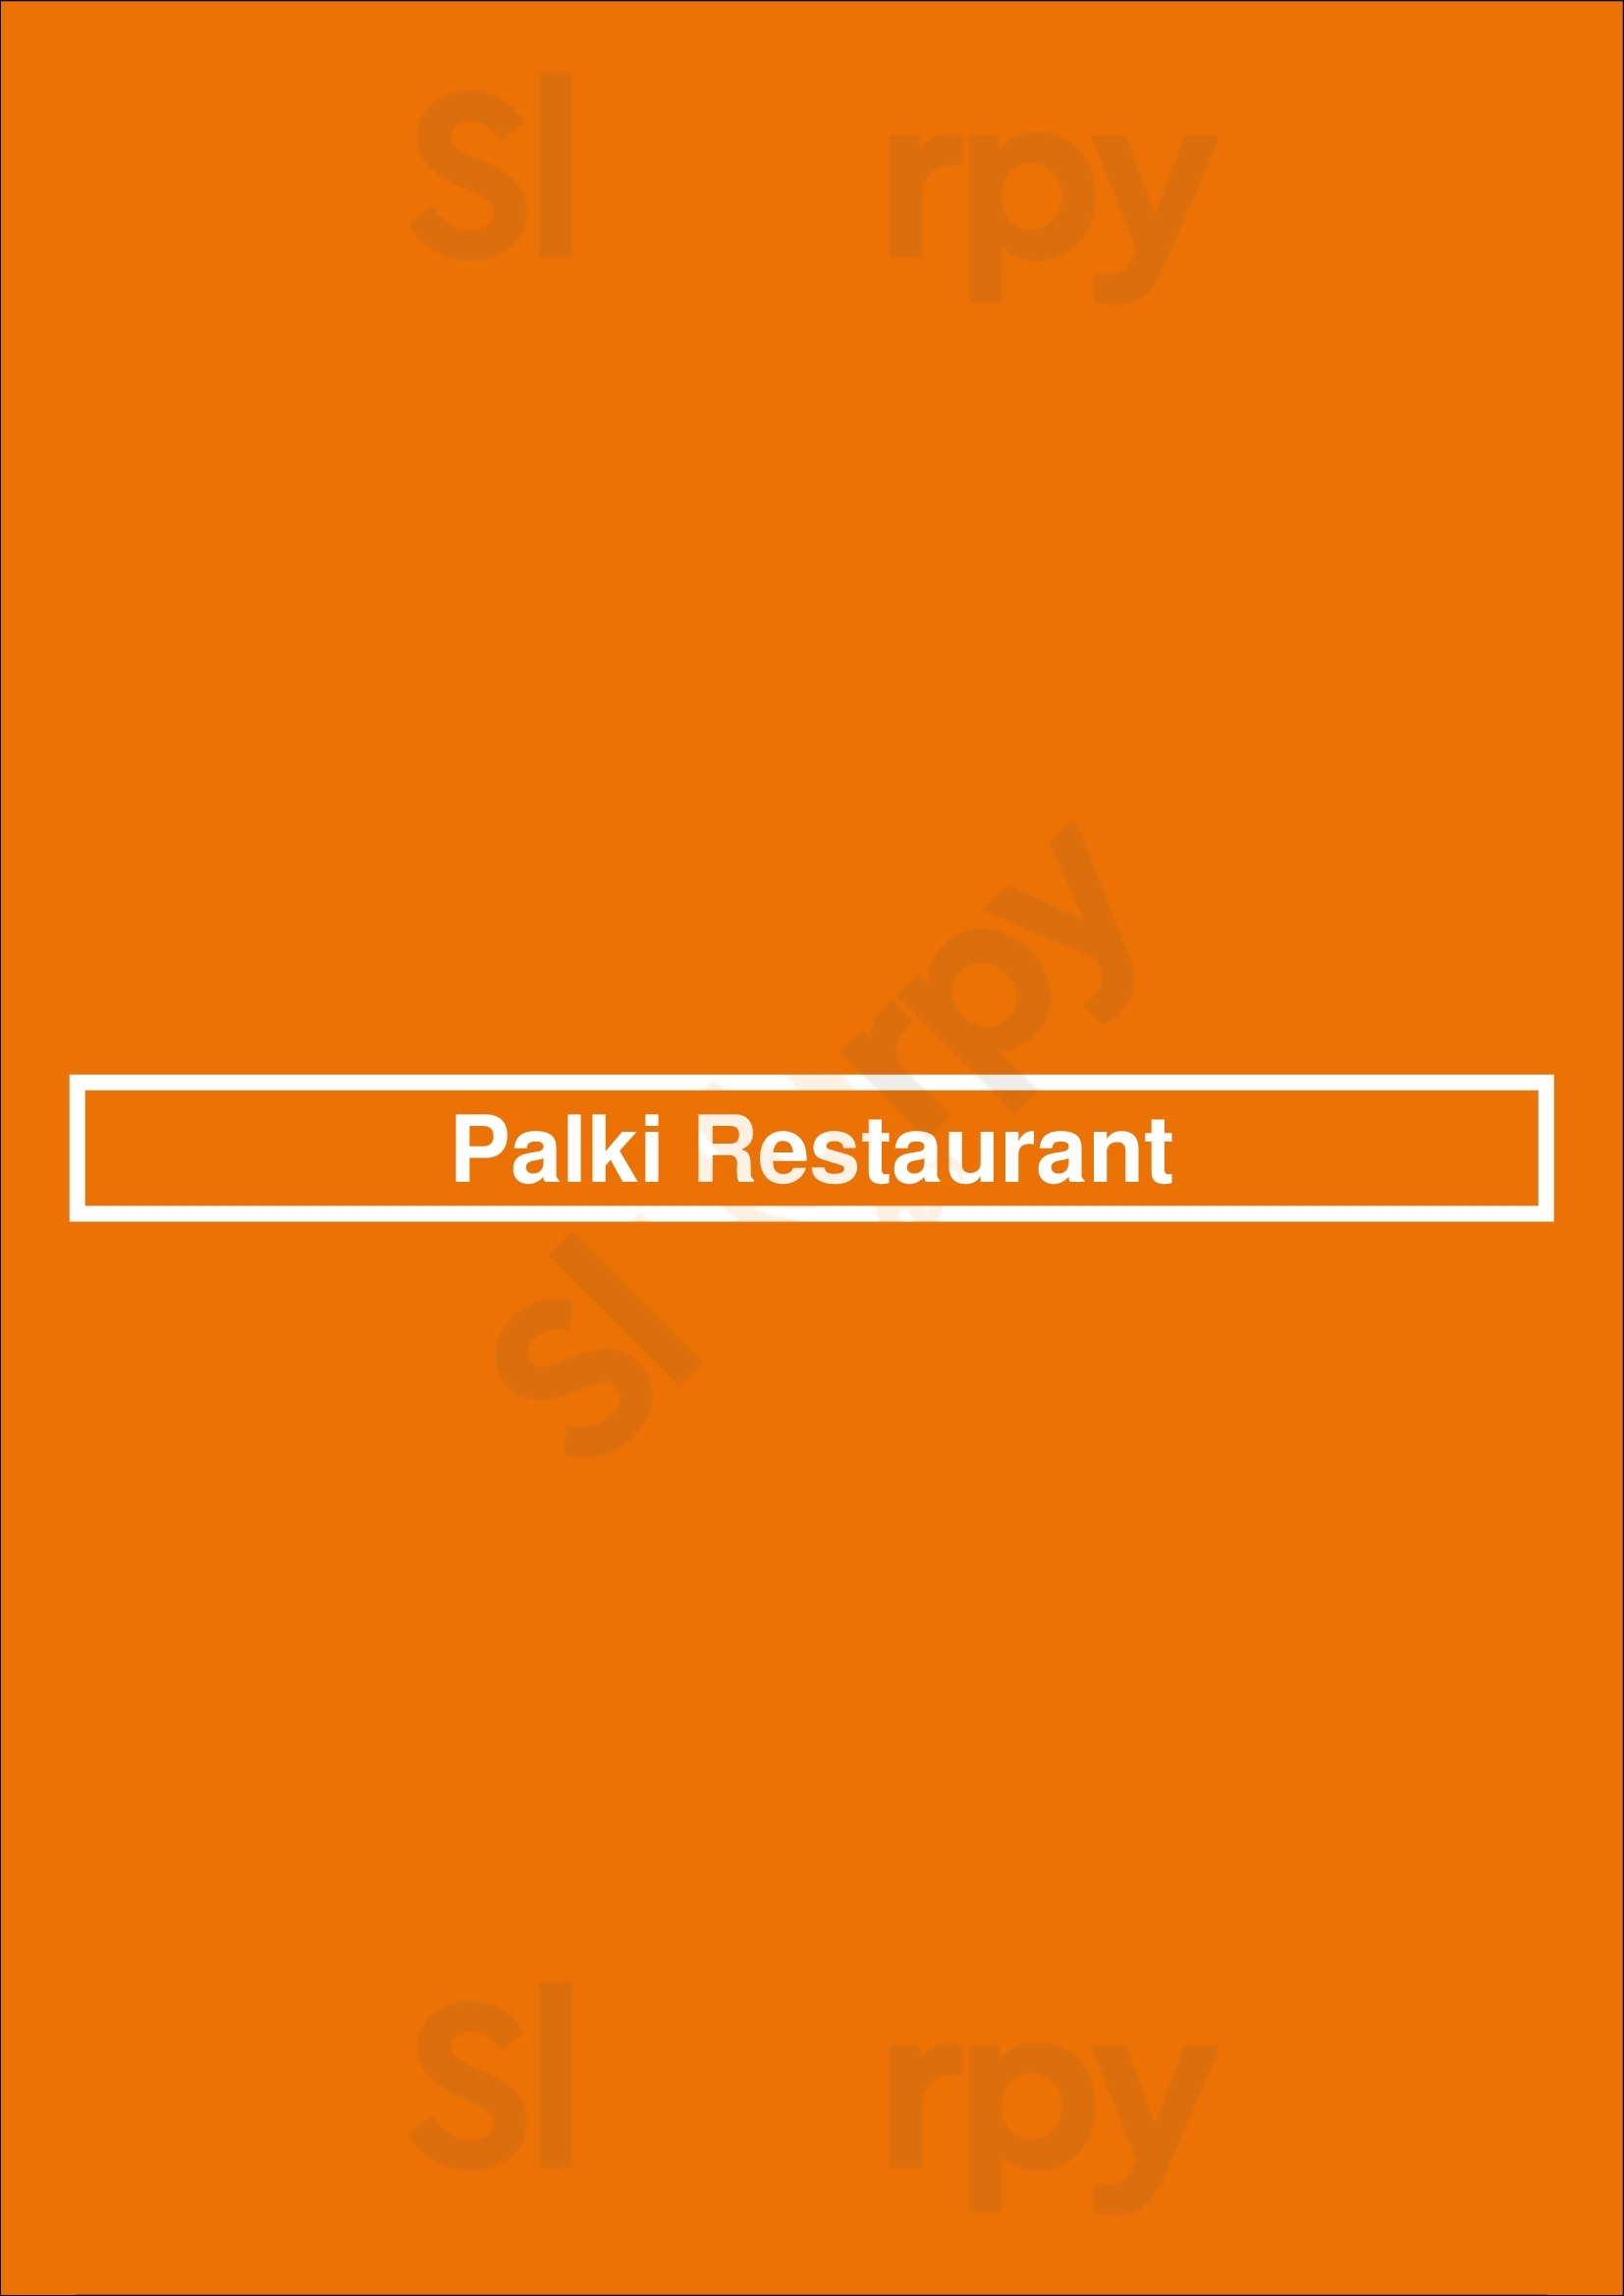 Palki Restaurant North Vancouver Menu - 1